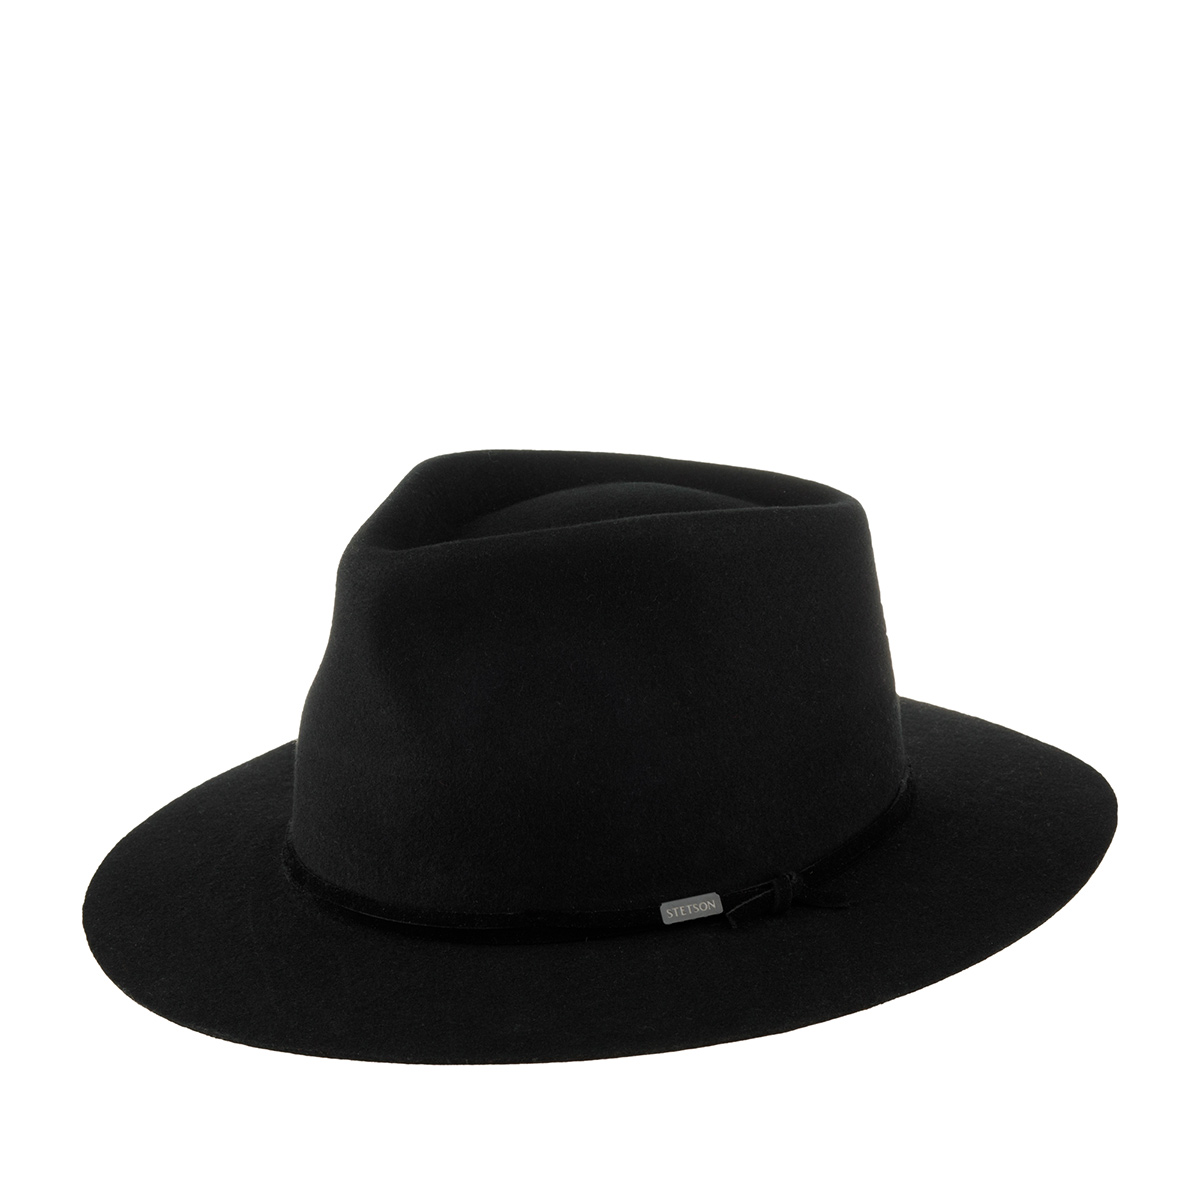 Шляпа унисекс Stetson 2198138 FEDORA WOOLFELT черная, р.59